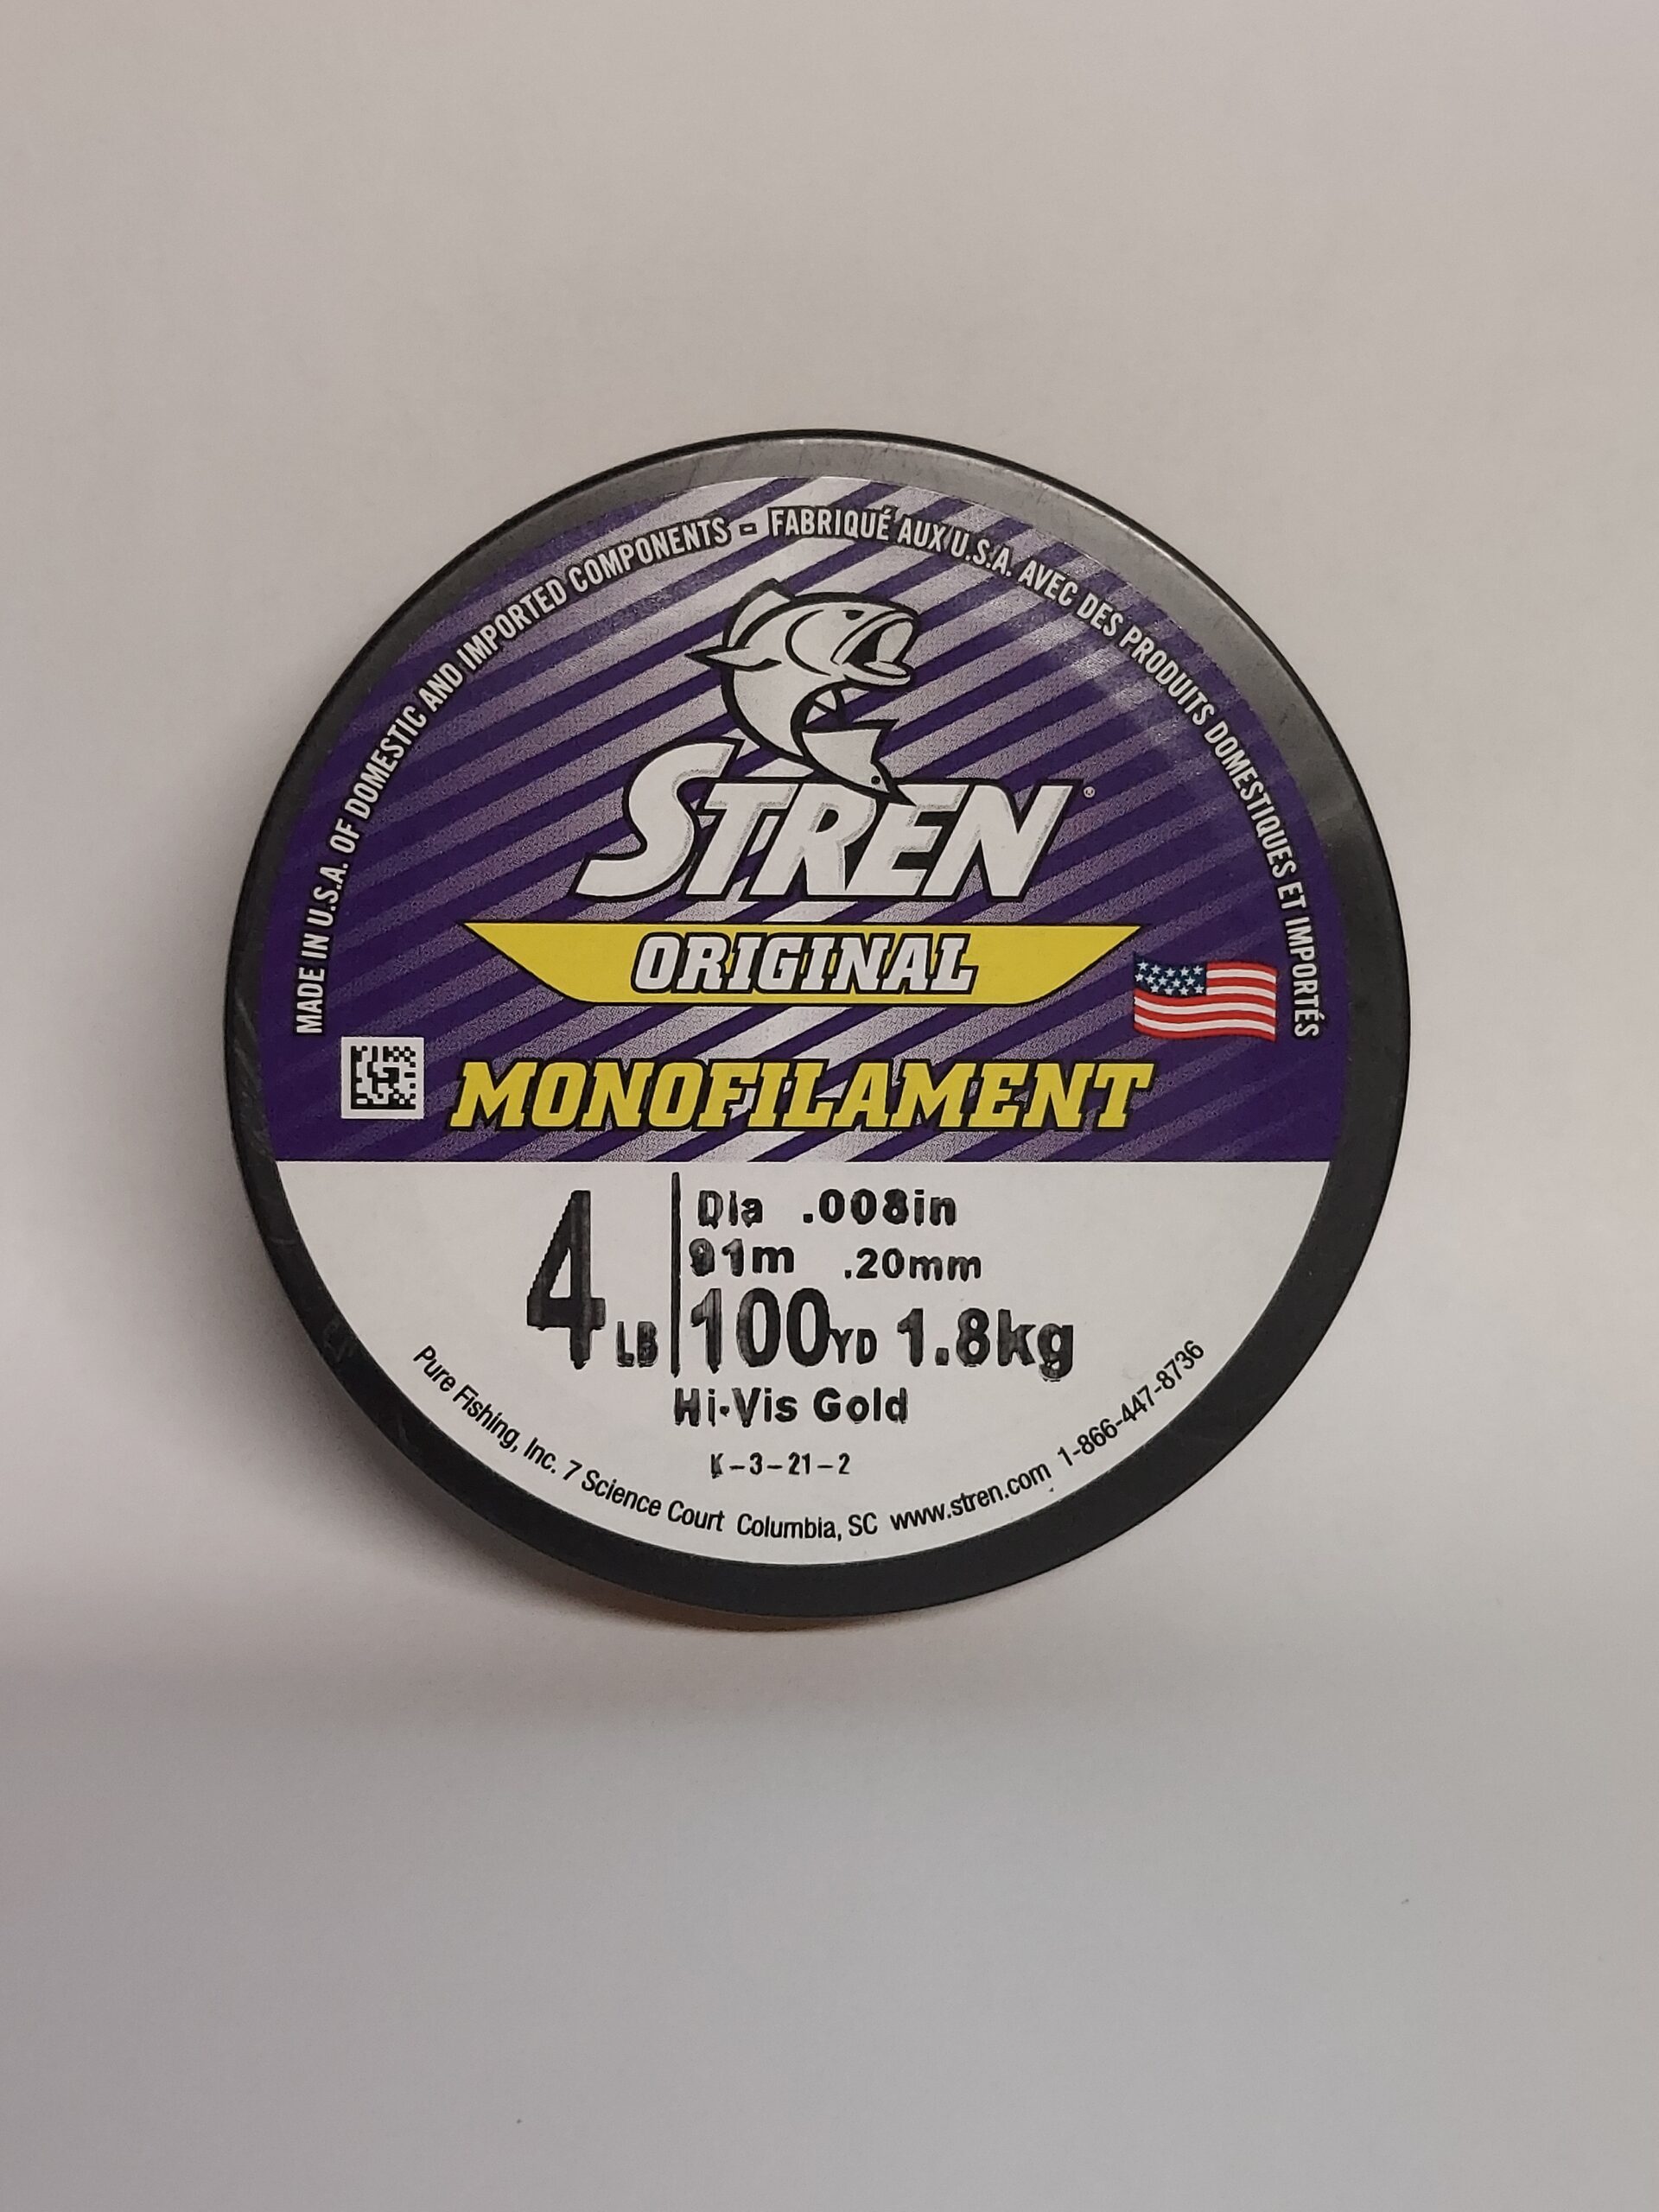 Stren Original Monofilament Fishing Line, HI-VIS Gold 100 YDS 4 lb